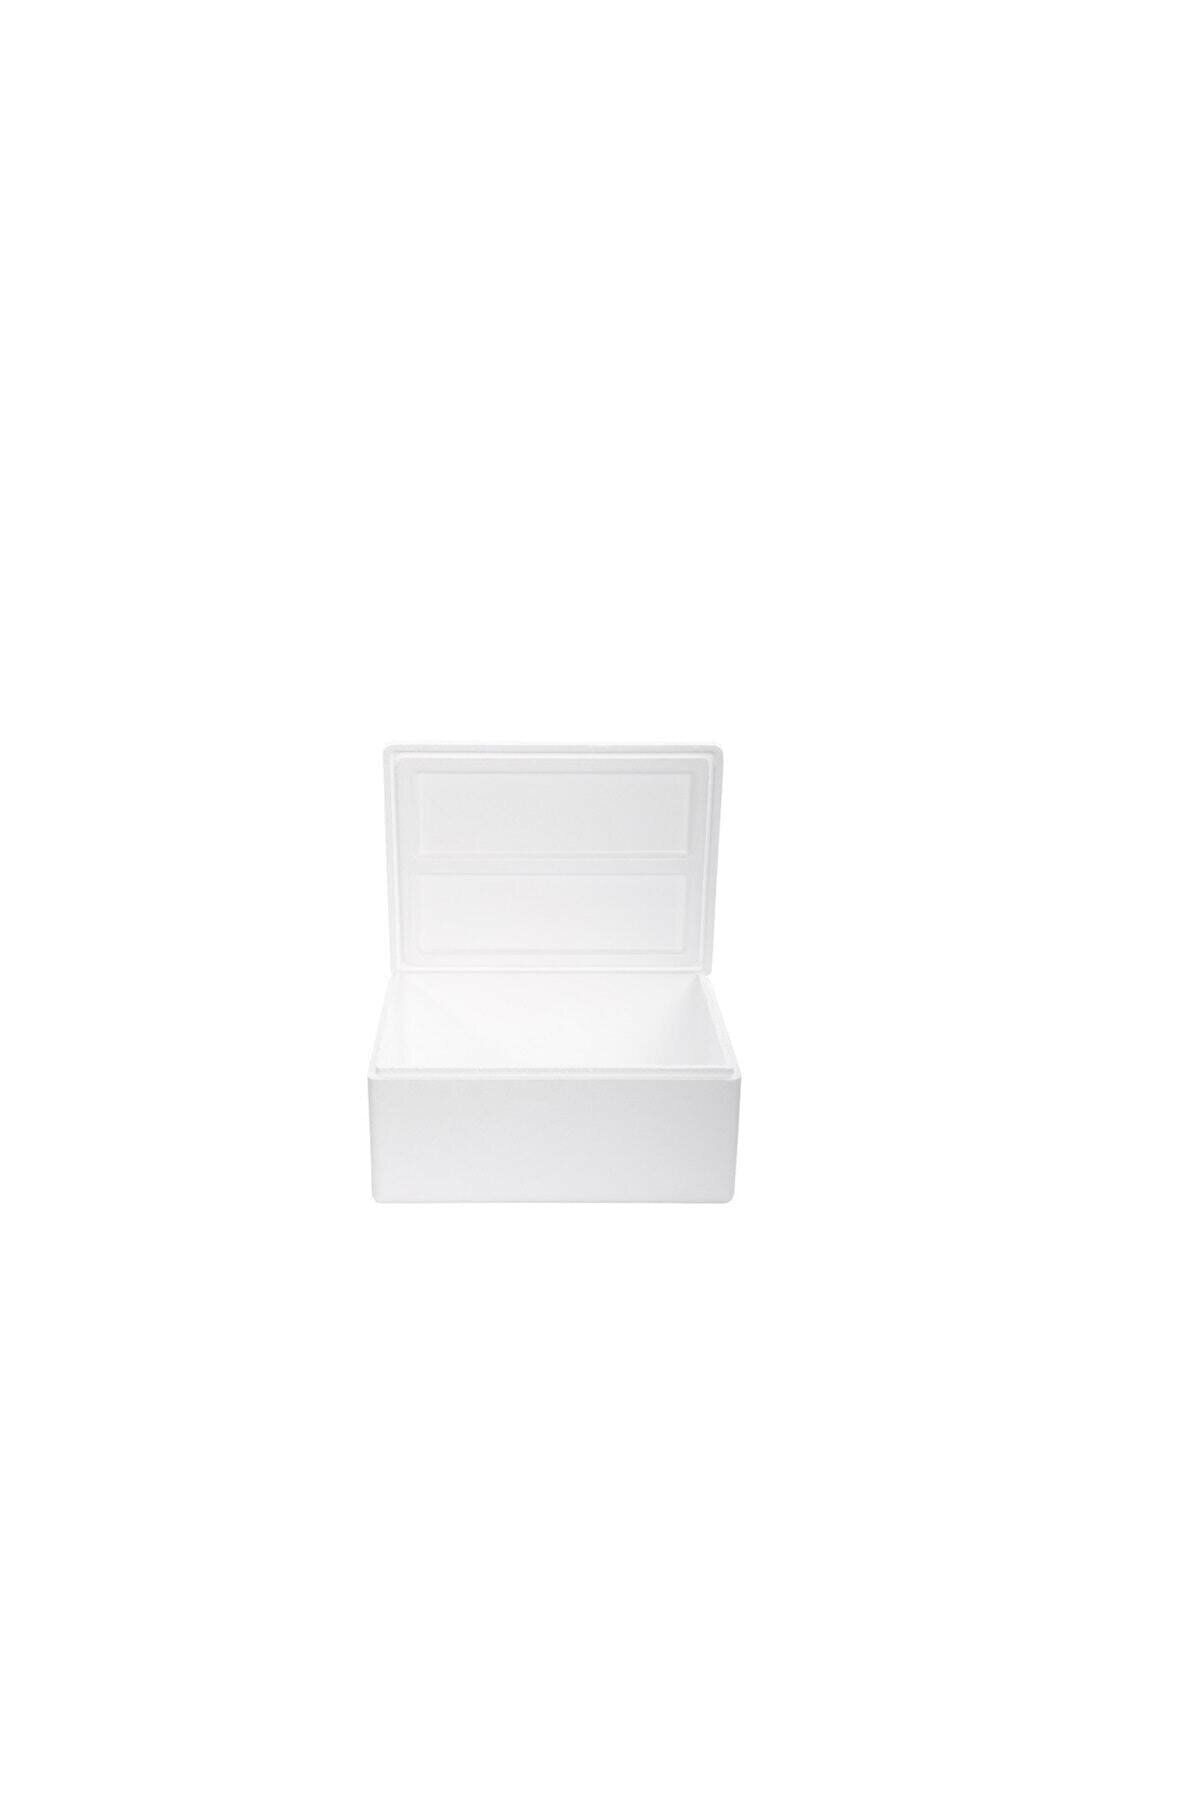 Nefes Sağlık Beyaz Strafor Köpük Kutu (56x43x30) Cm 20 Kg - 2 Adet K-1 ( 2 Adet)